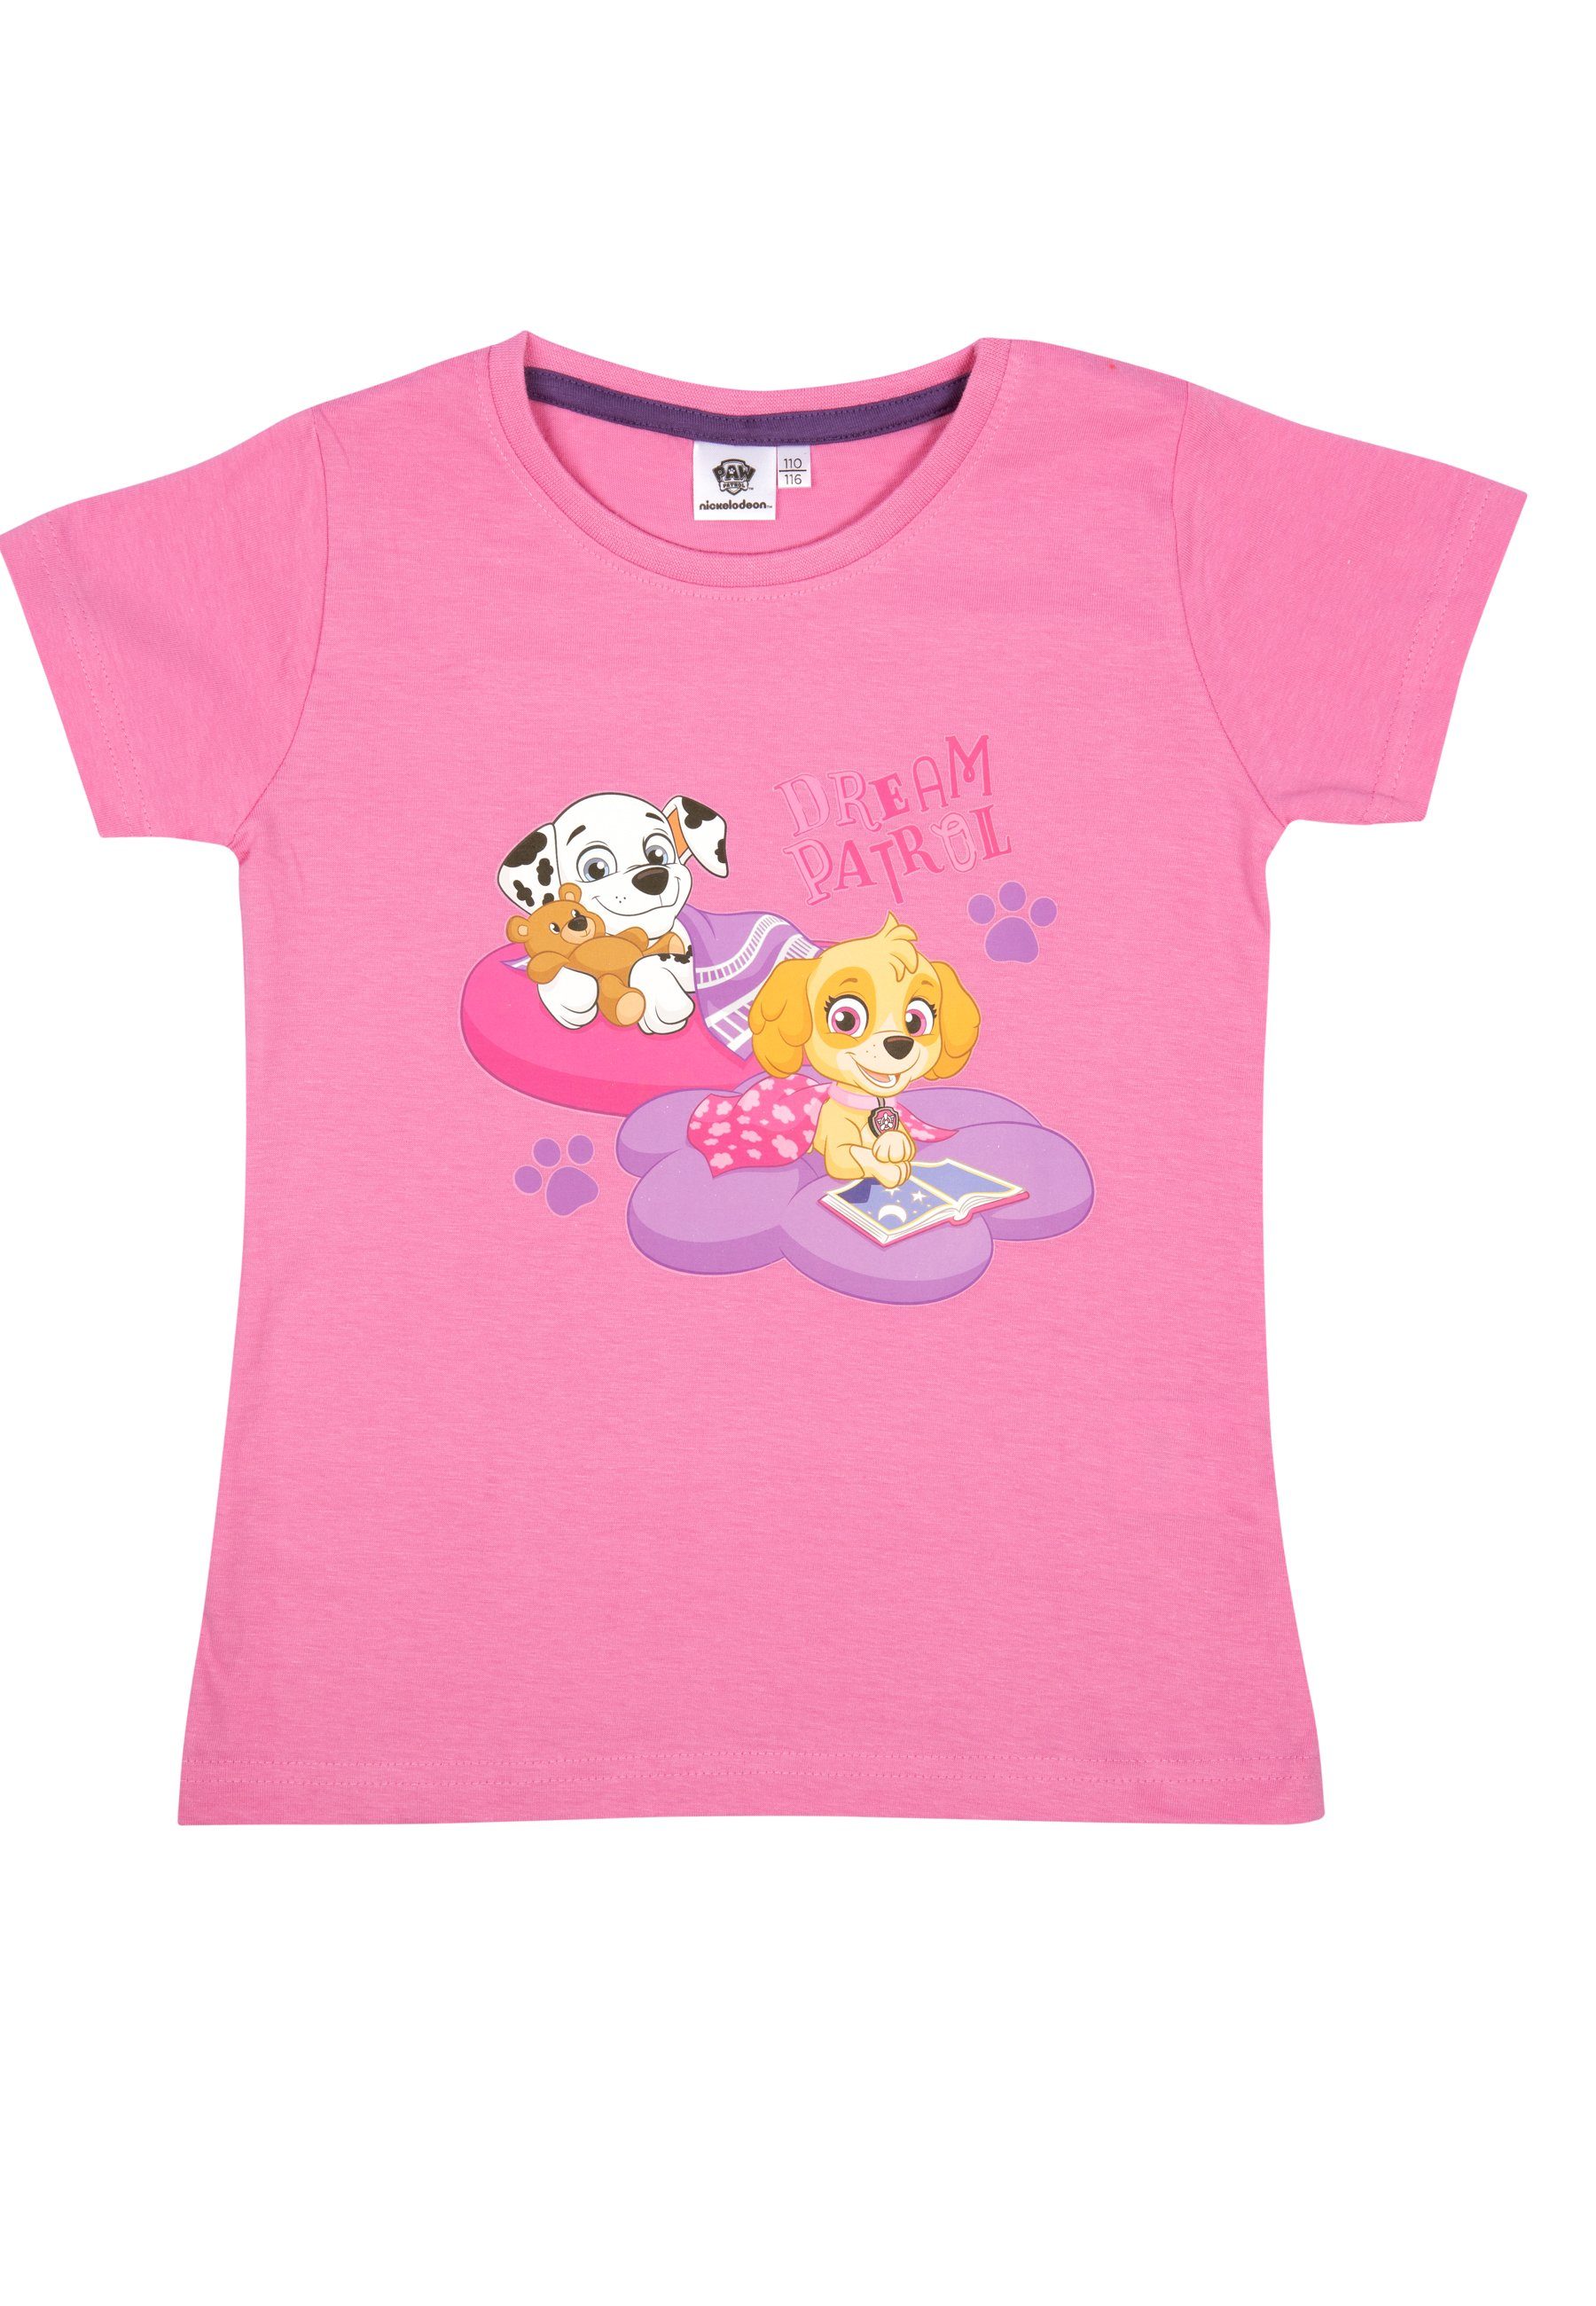 United Labels® Schlafanzug Paw Patrol Set Rosa/Lila - Kurzarm Mädchen für Pyjama Schlafanzug